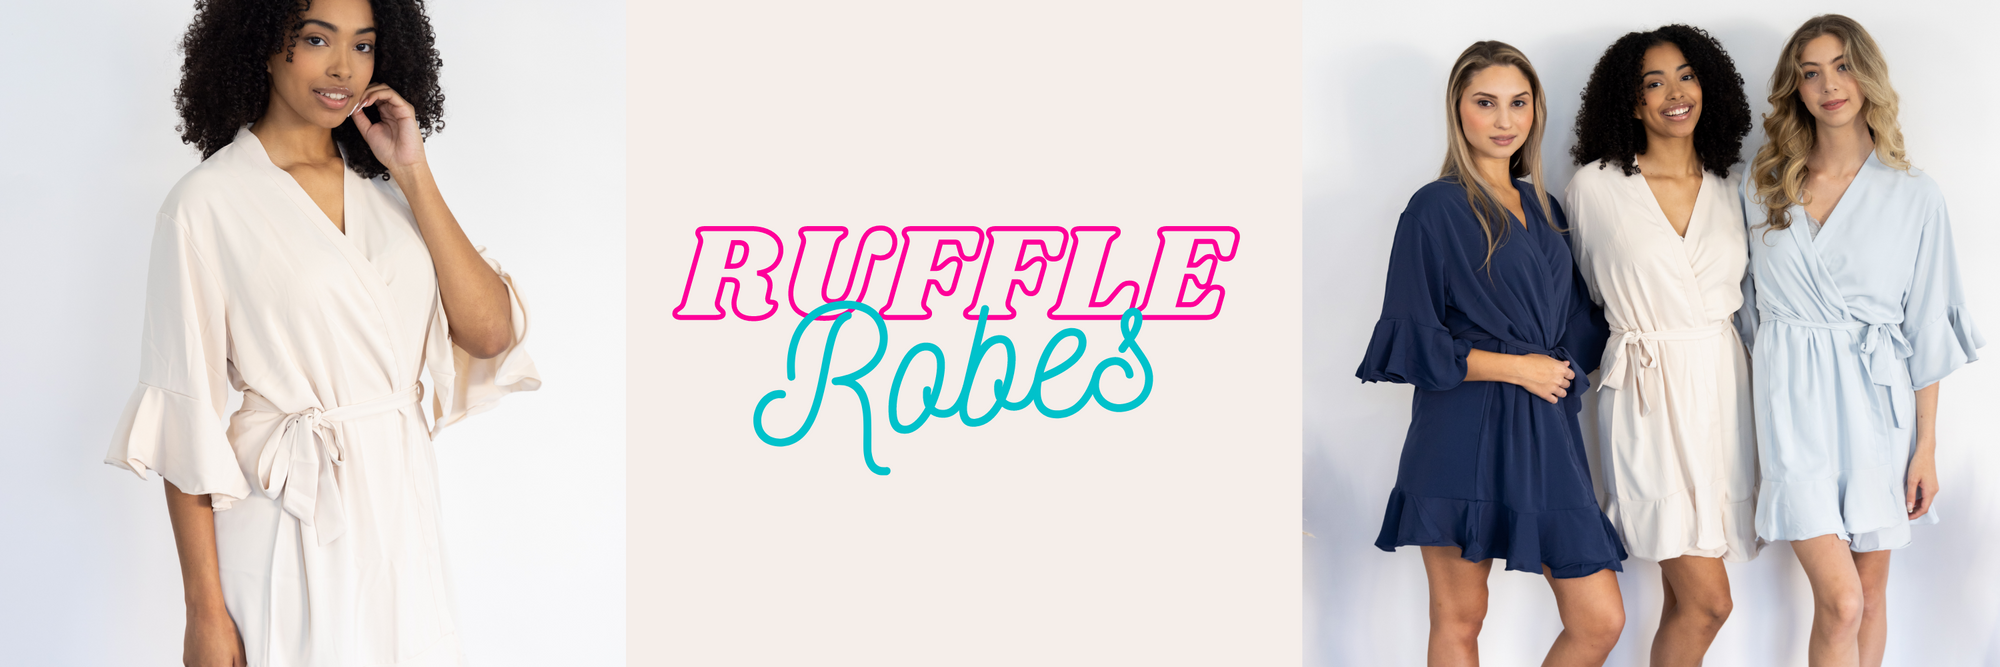 Ruffle Robes